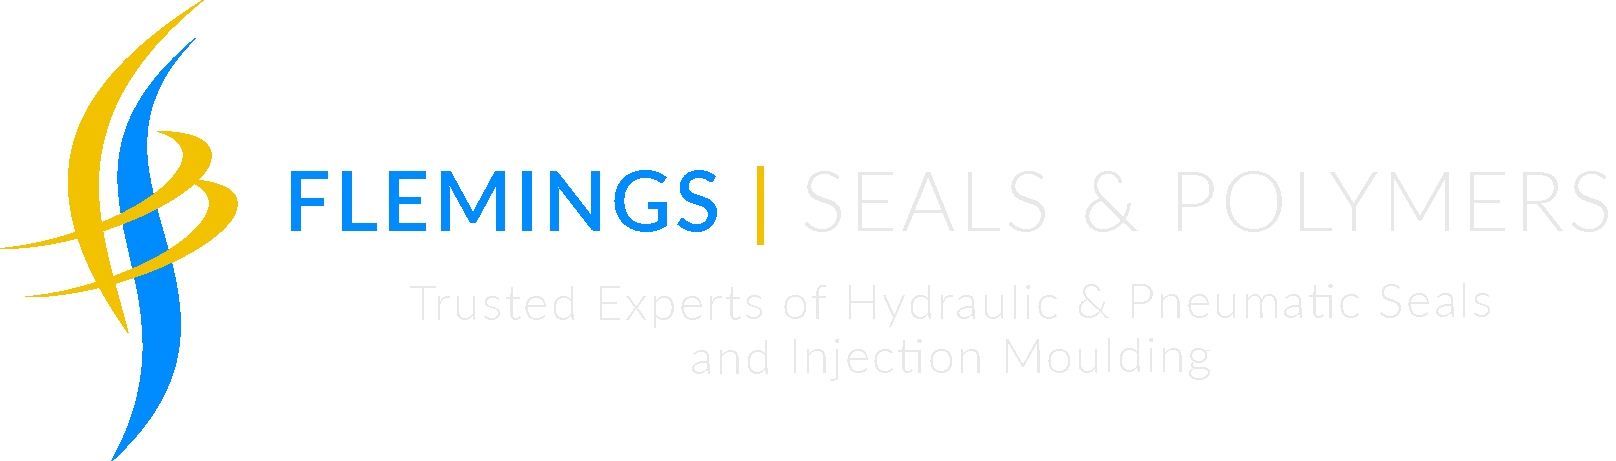 Fleming's Logo - Flemings Seals & Polymers